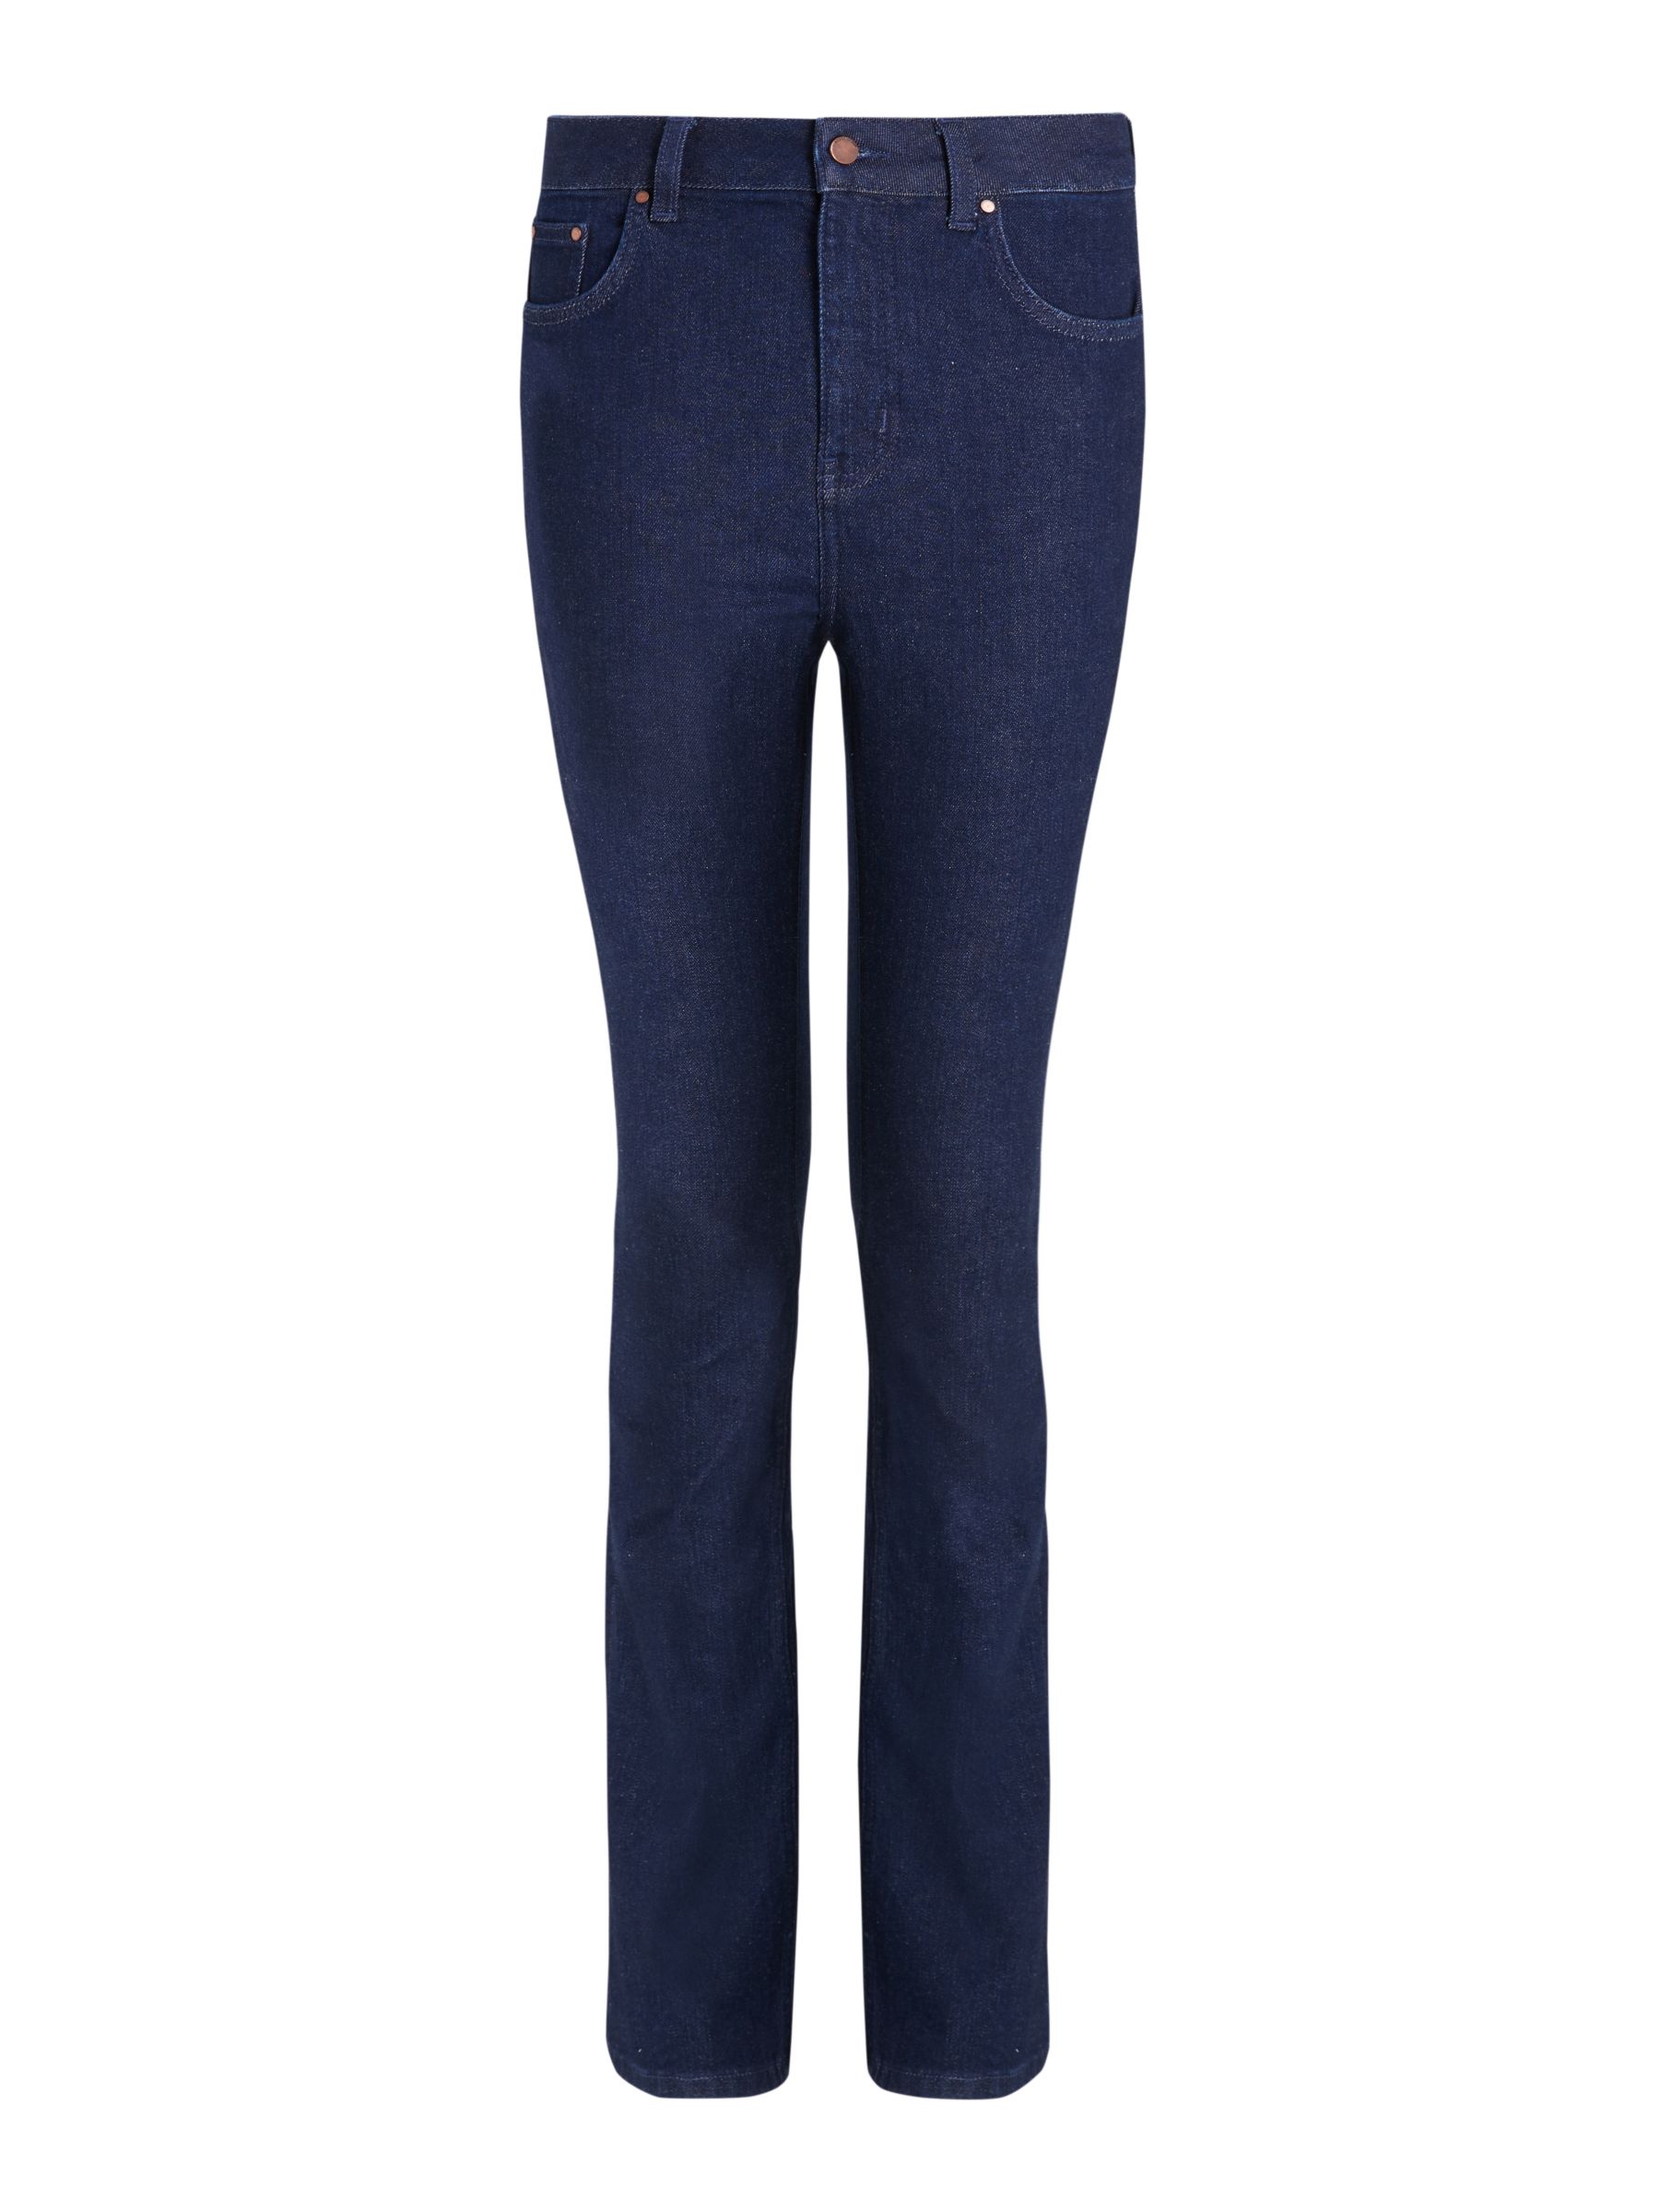 Boden Bootcut Jeans, Rinse Indigo at John Lewis & Partners